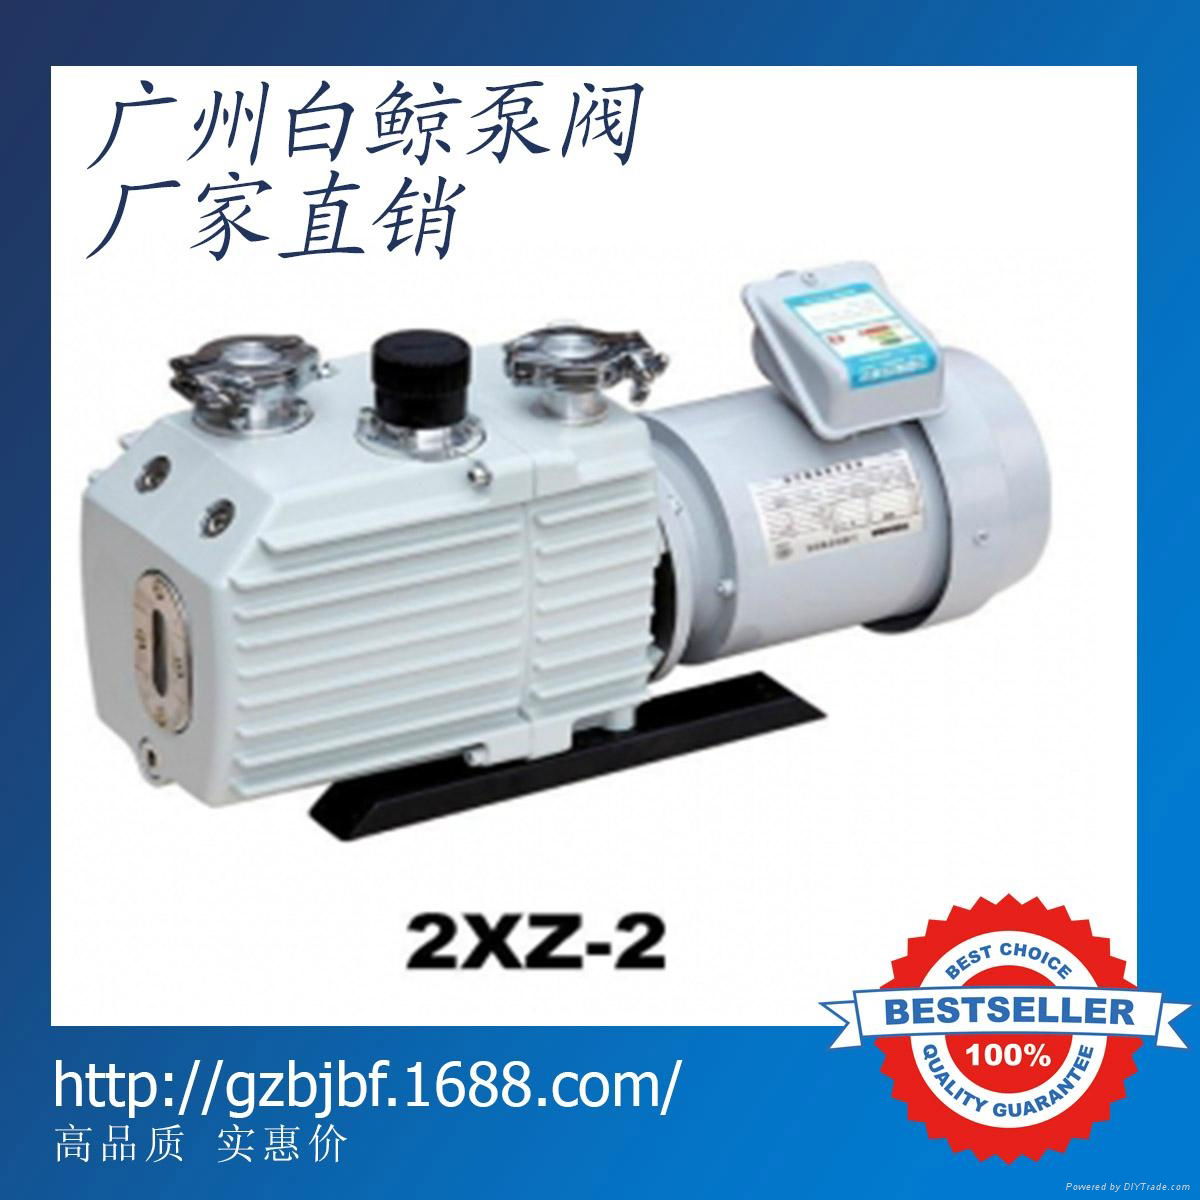 2xz－15 Double Stage Structure Rotary Vane mini Vacuum pump  2